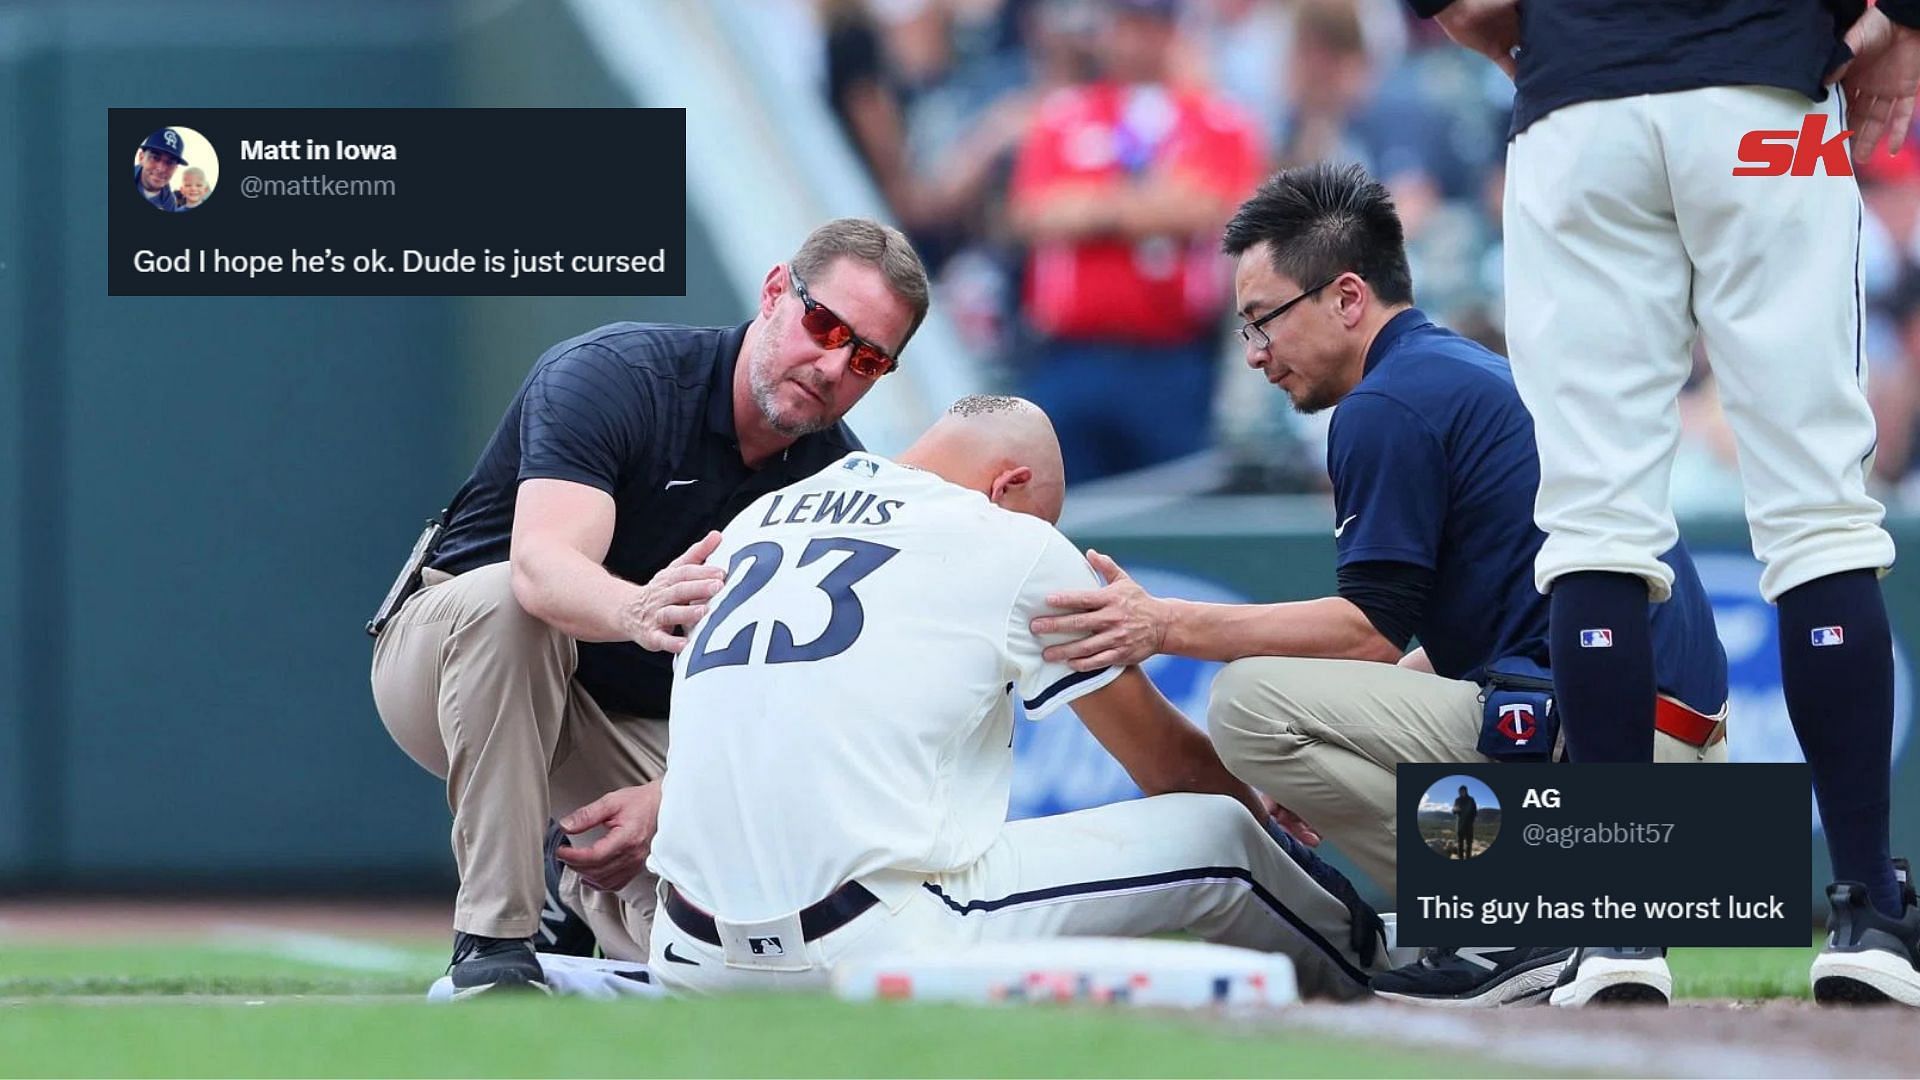 Awkward Photos From MLB Photo Day